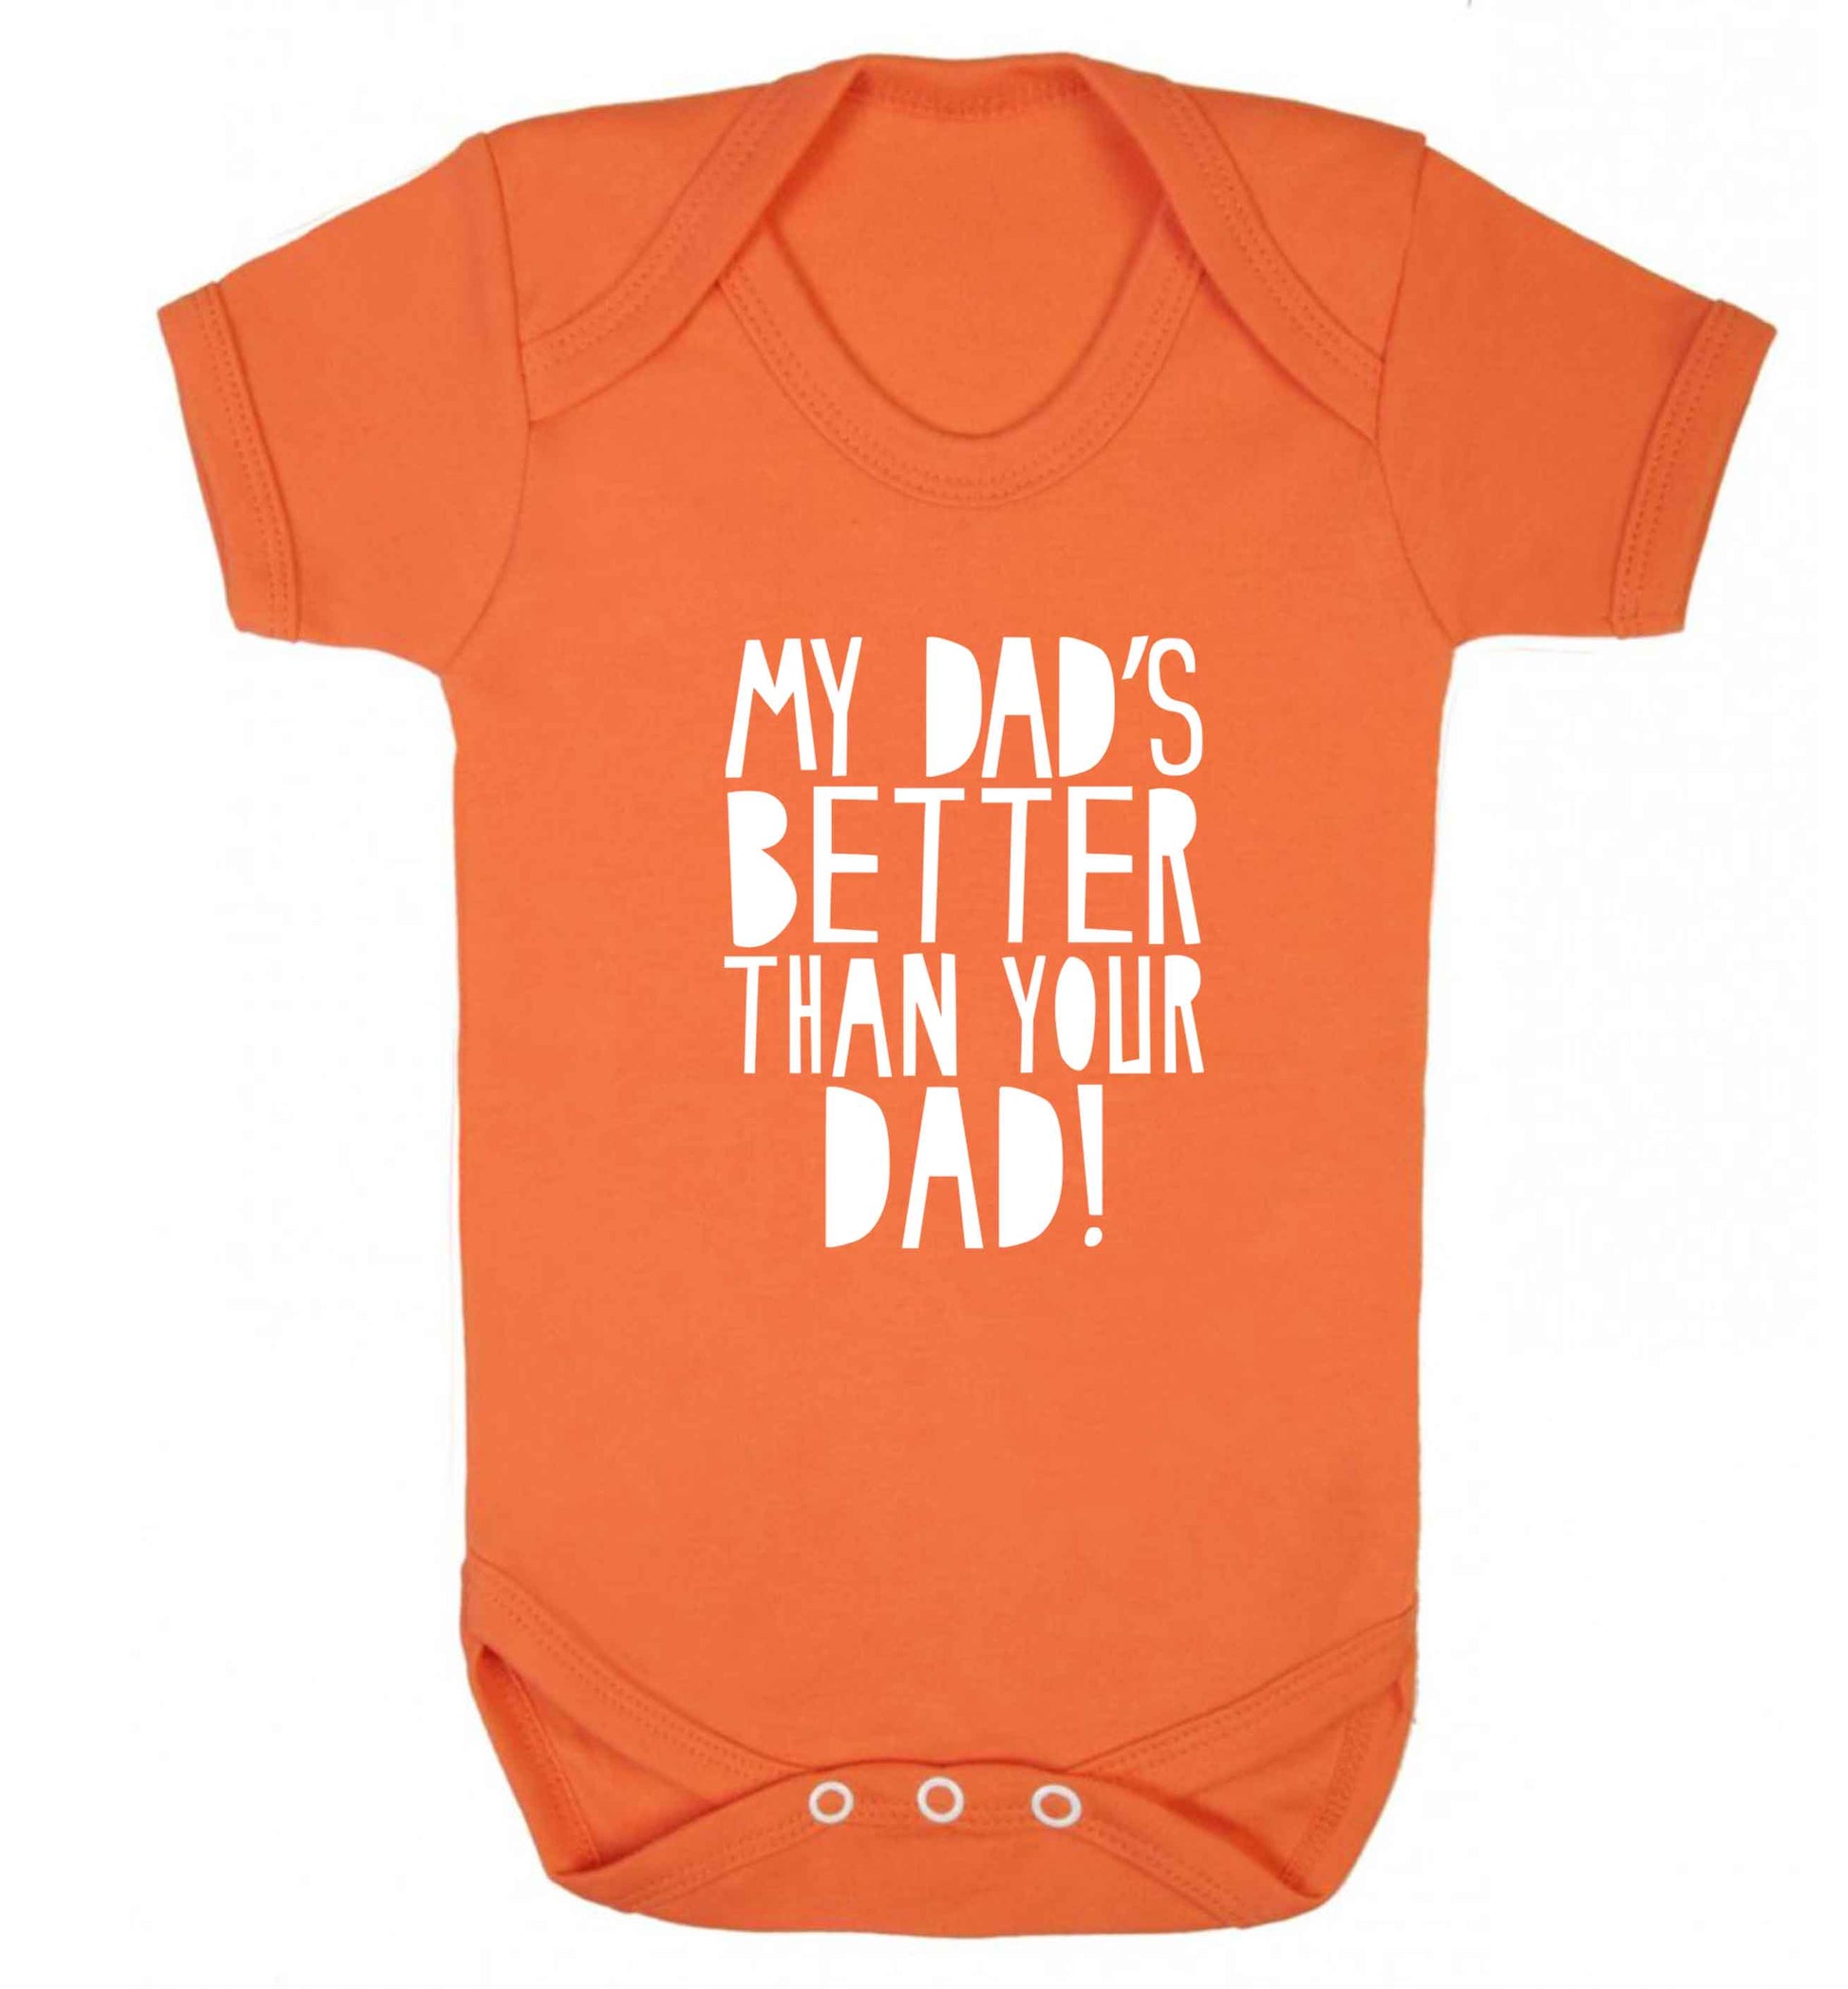 My dad's better than your dad! baby vest orange 18-24 months